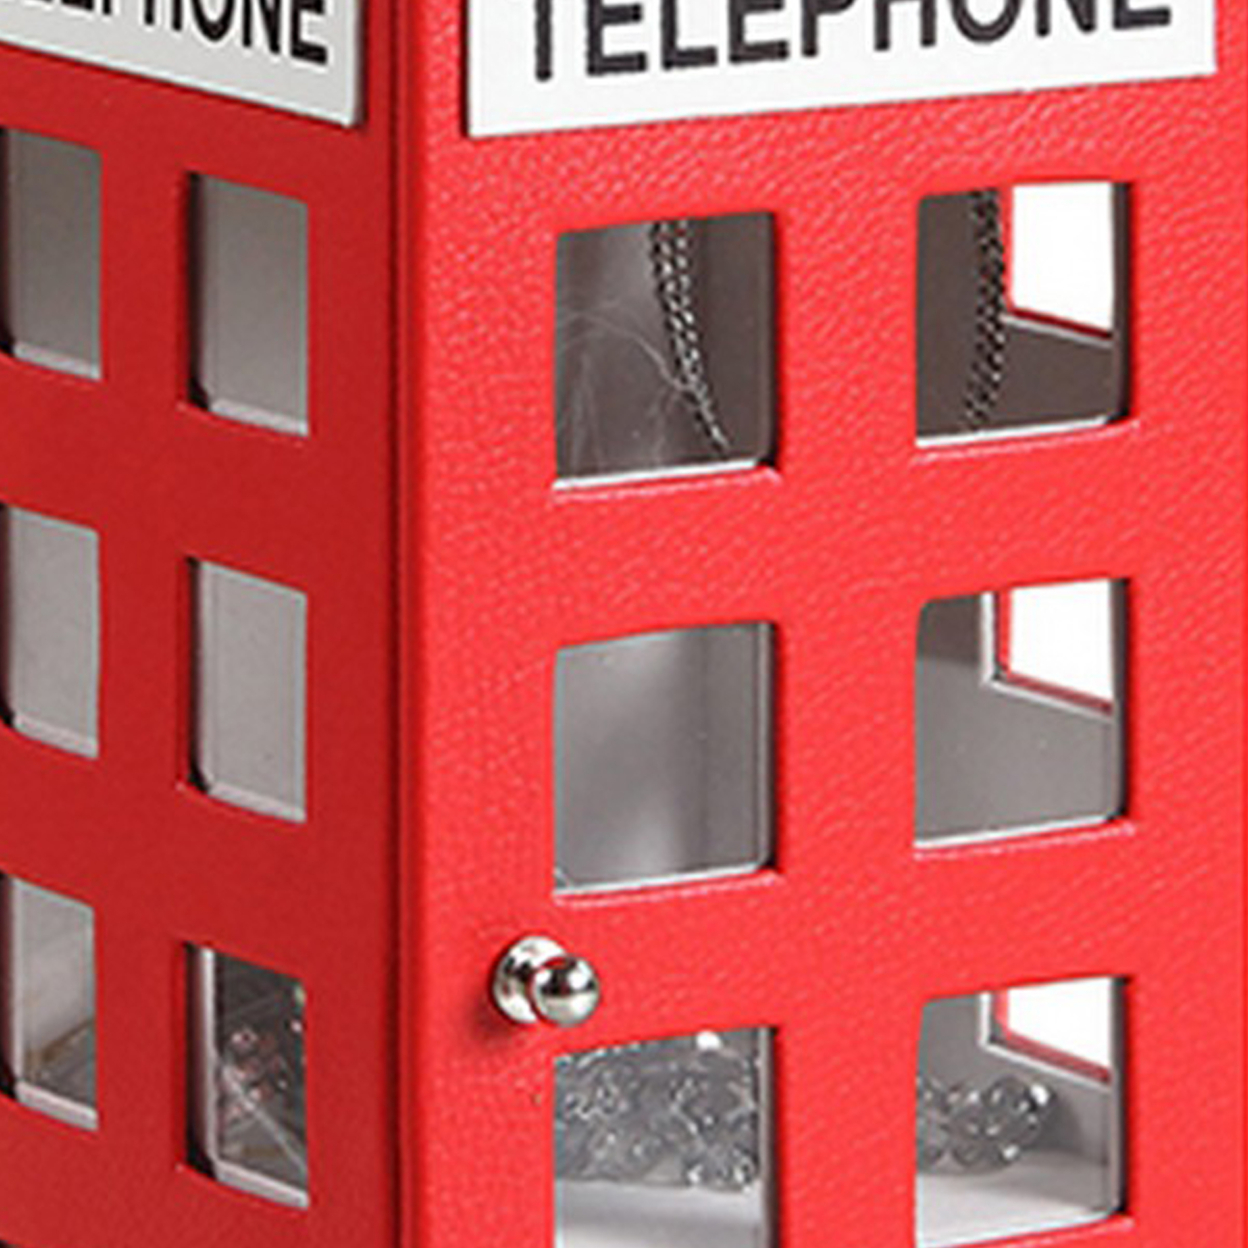 Telephone Booth Jewelry Box With 2 Drawers, Red- Saltoro Sherpi